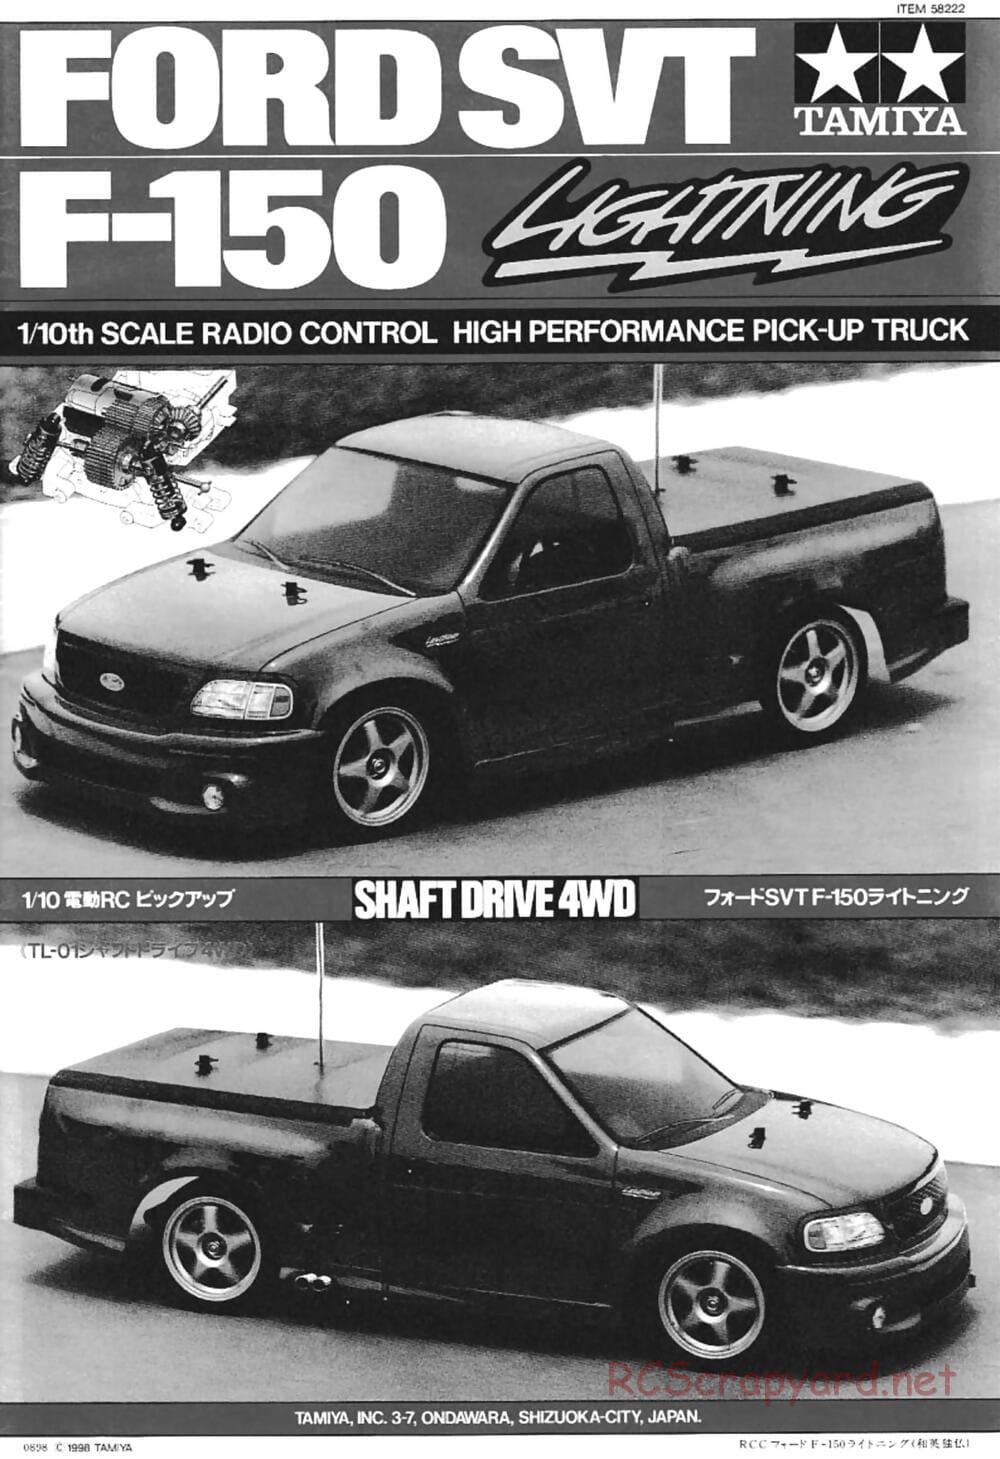 Tamiya - Ford SVT F-150 Lightning - TL-01 Chassis - Manual - Page 1